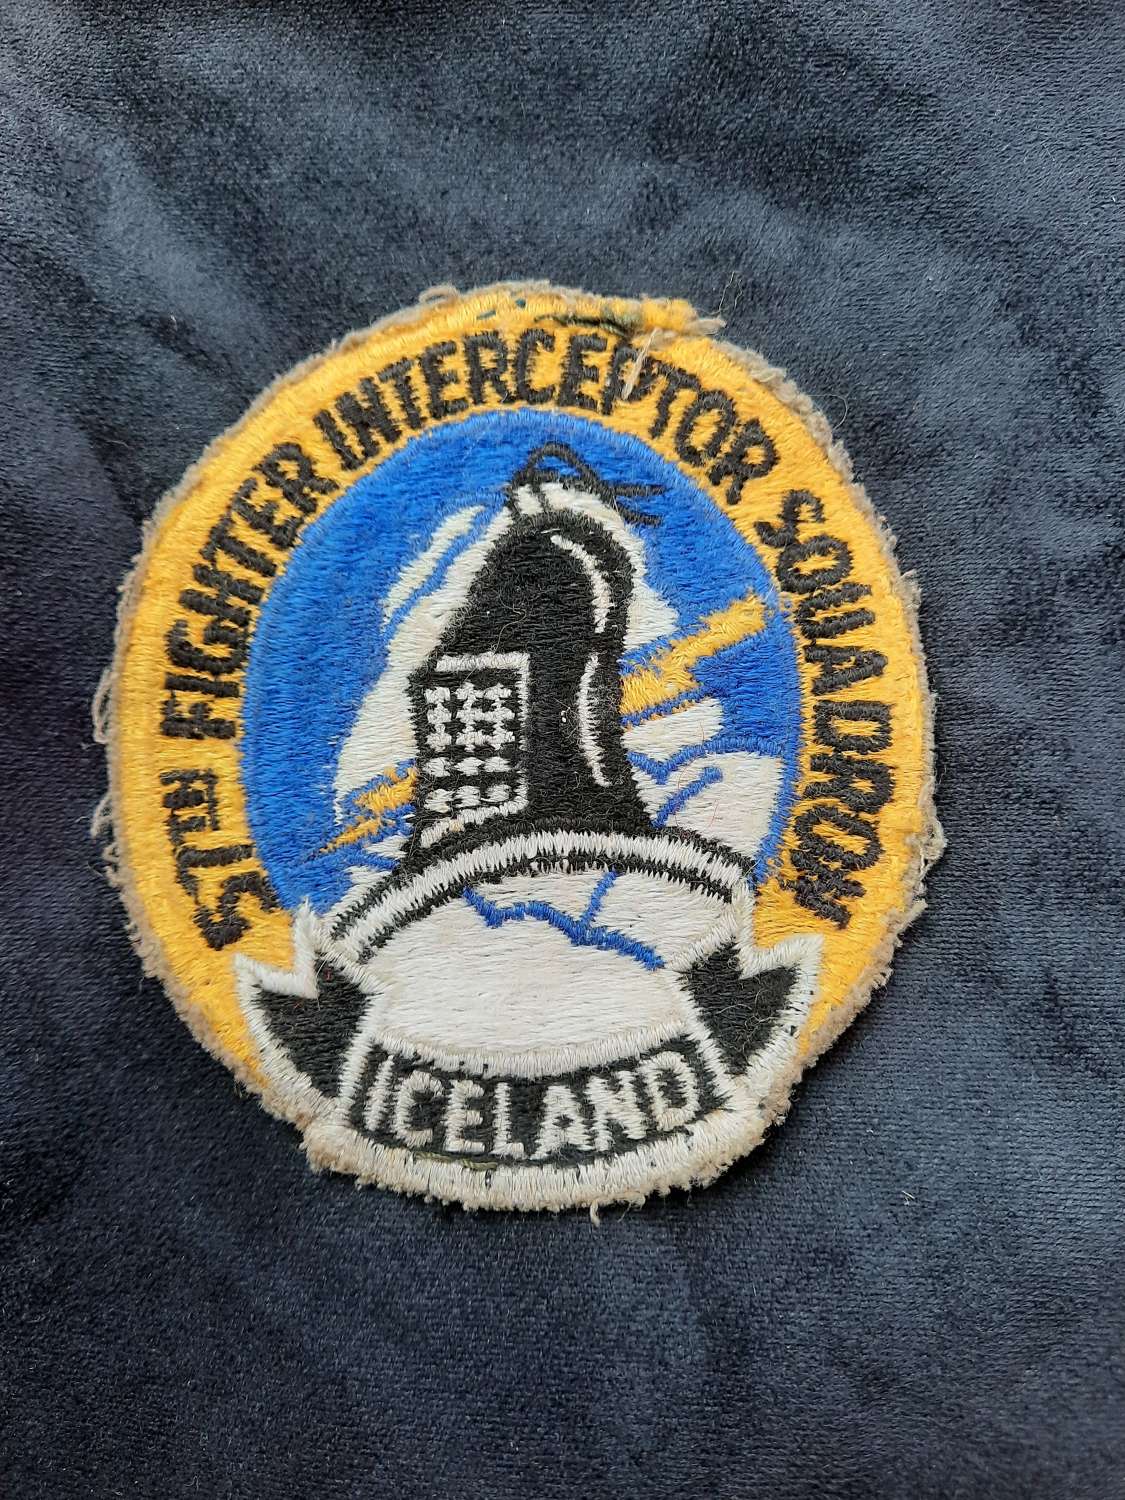 USAF 57th Fighter Interceptor Squadron